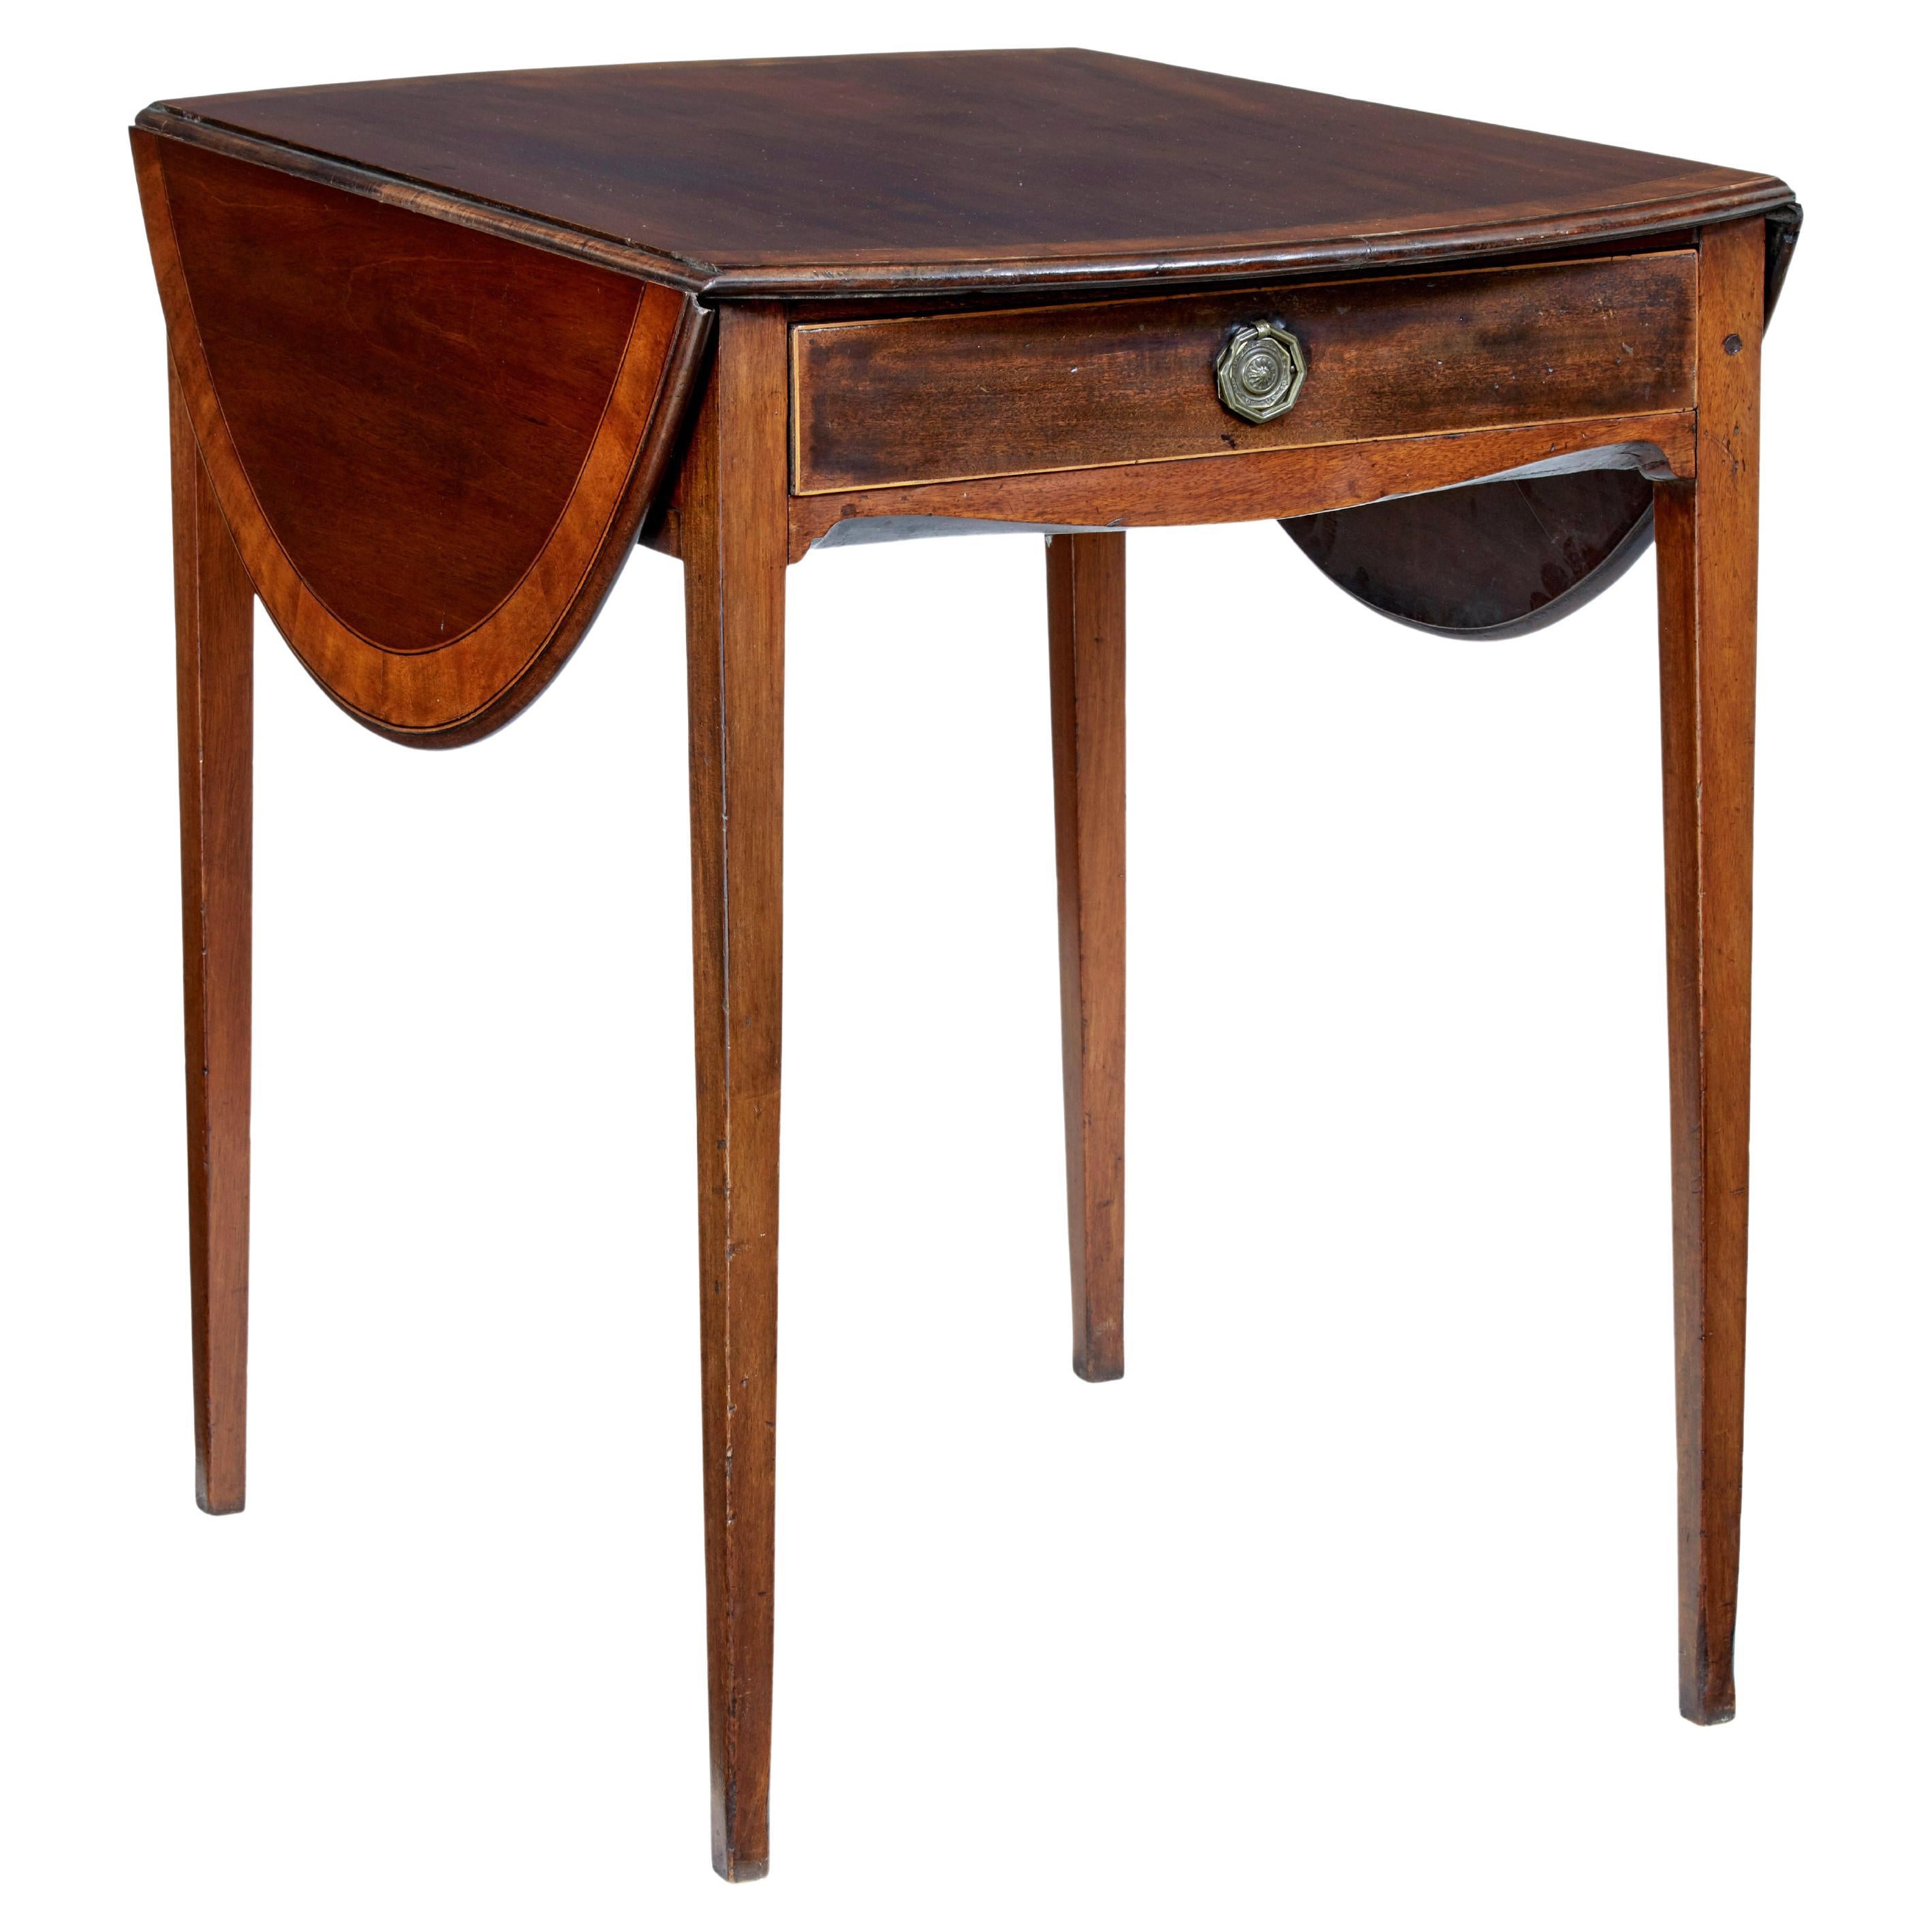 19th century late regency mahogany pembroke table For Sale